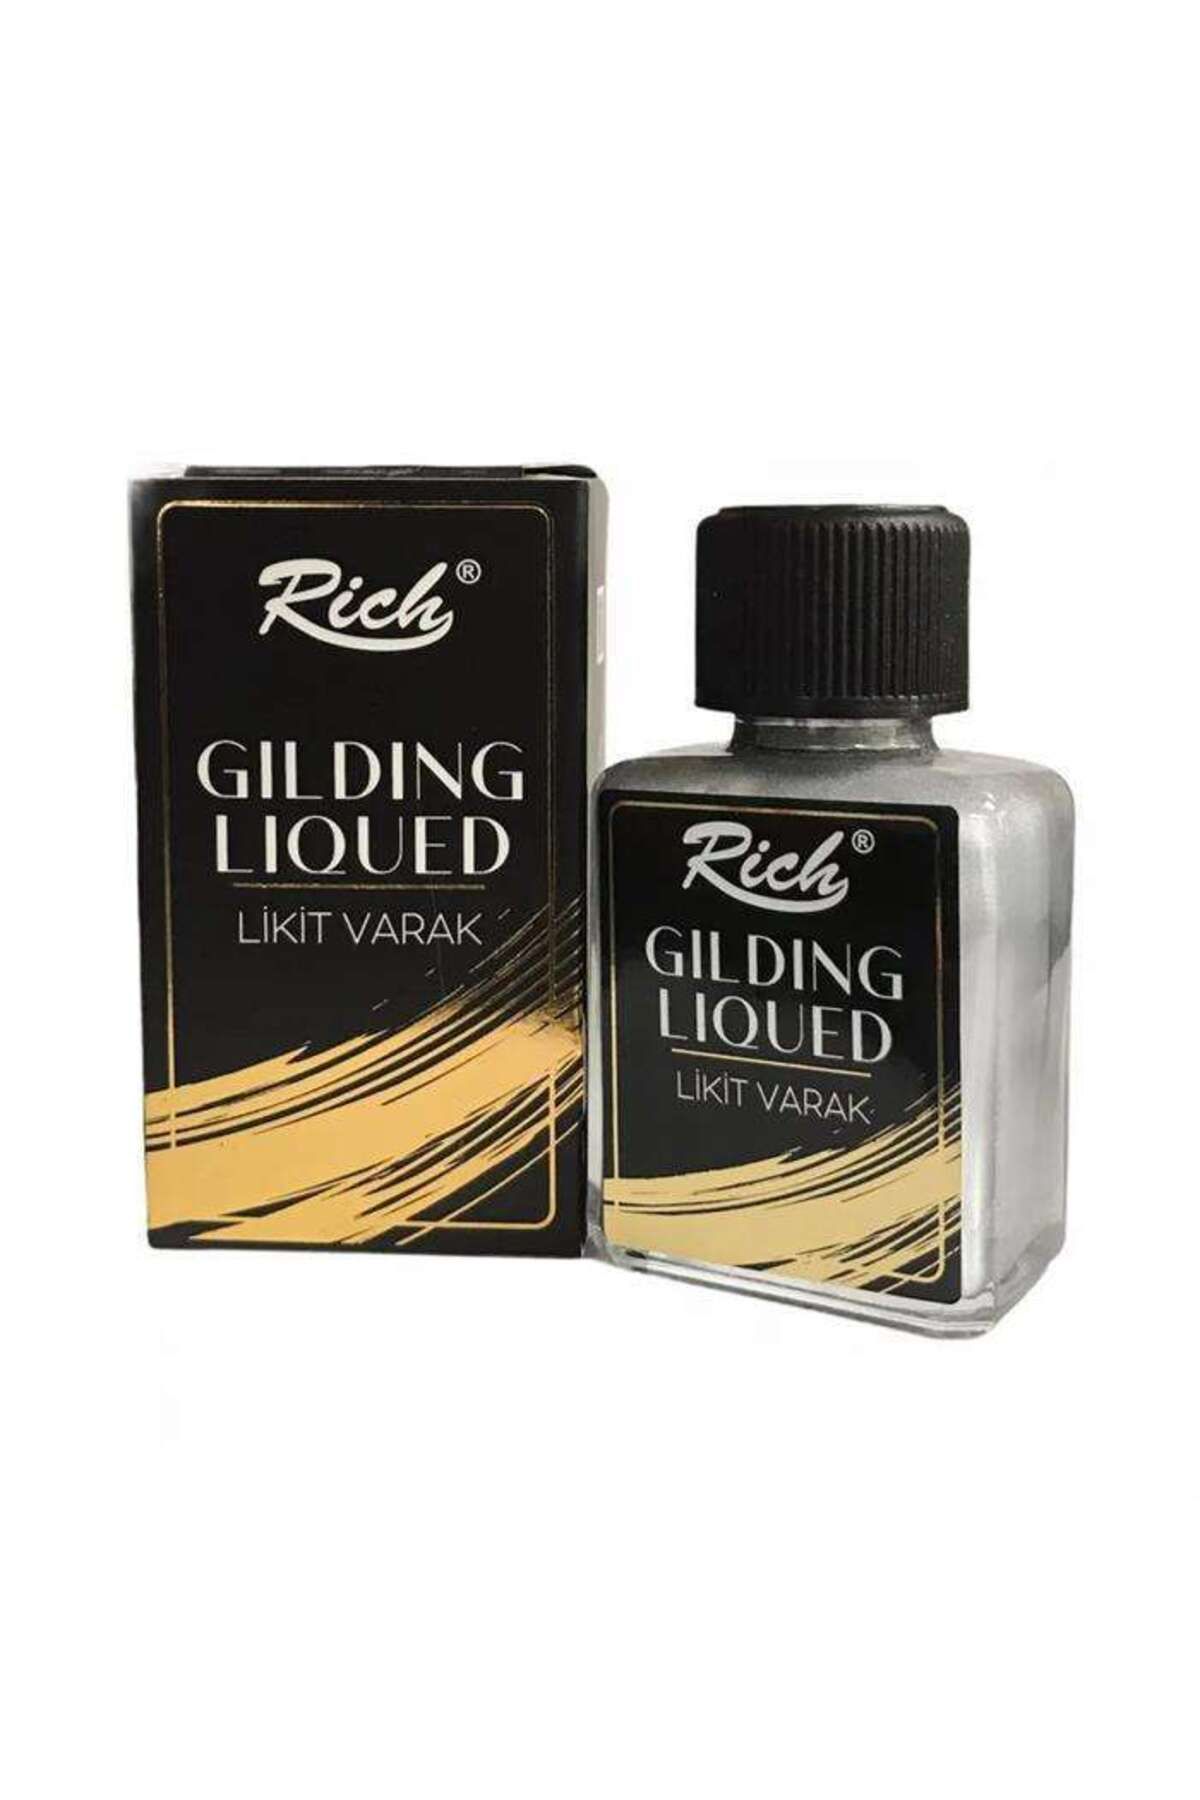 Rich Gilding Liqued Sıvı Varak 75 ml Gümüş